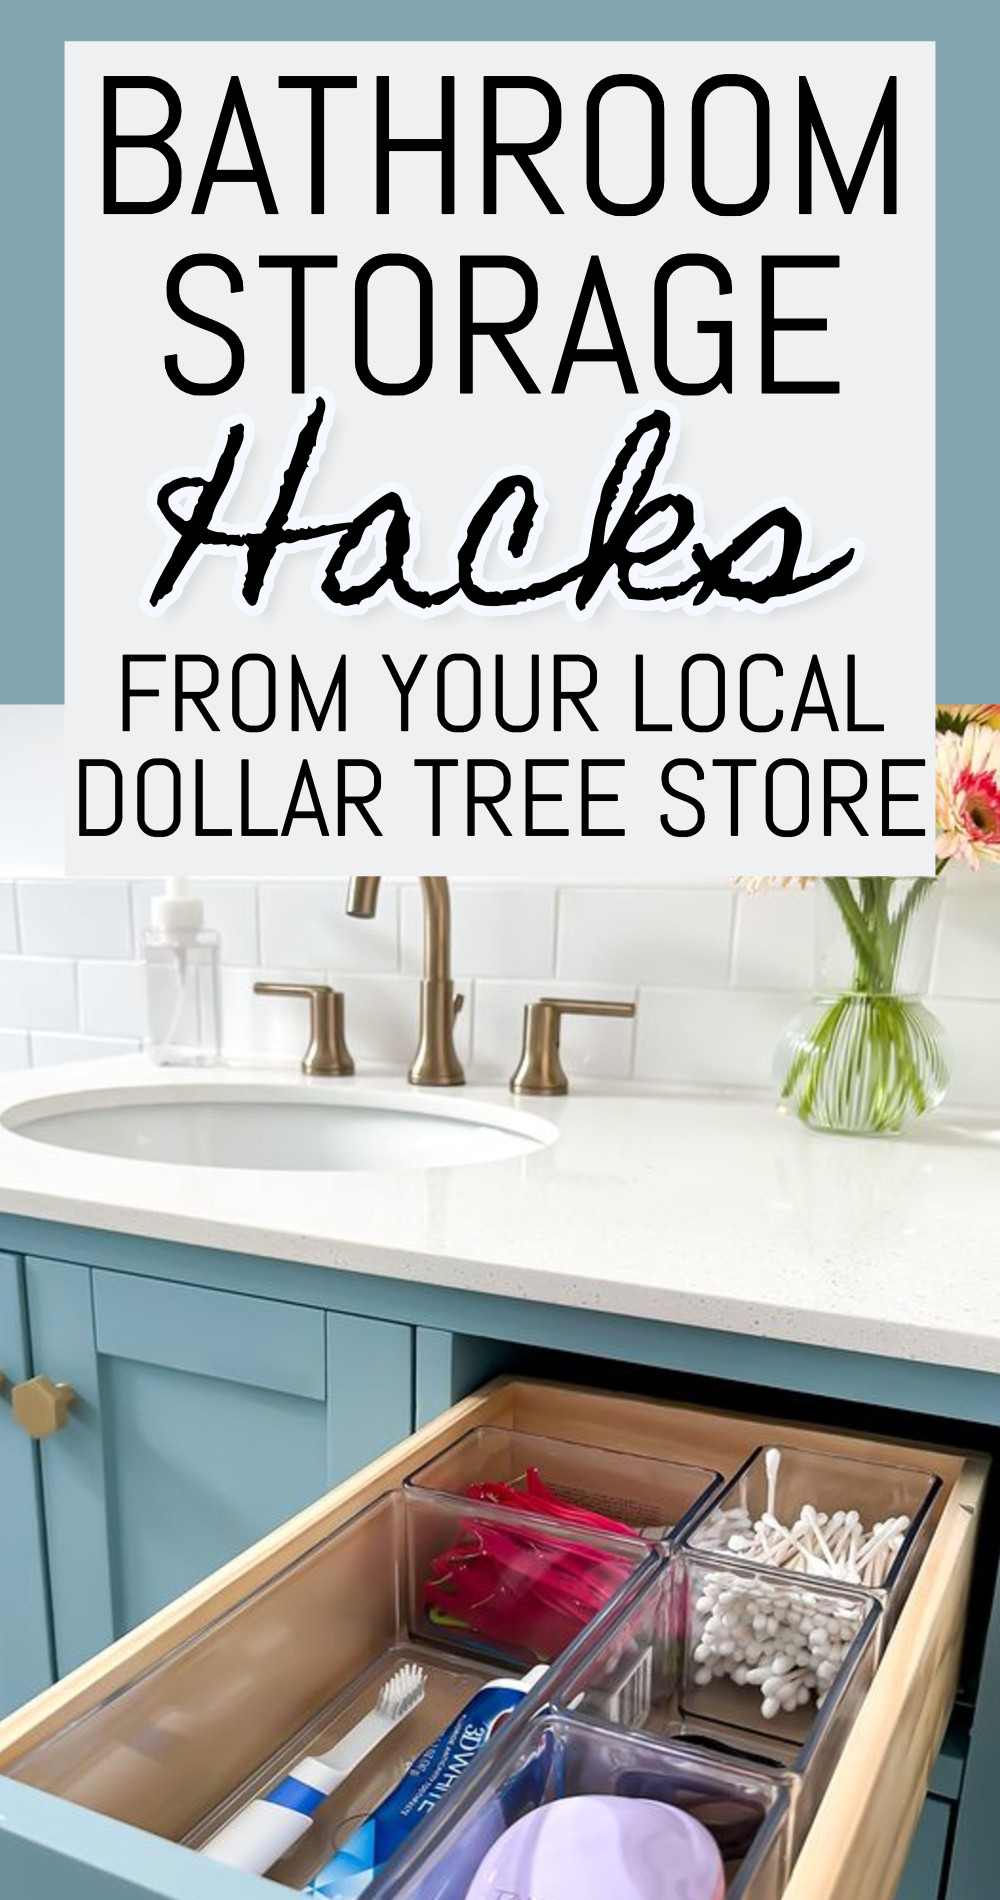 Bathroom storage hacks from local dollar tree store